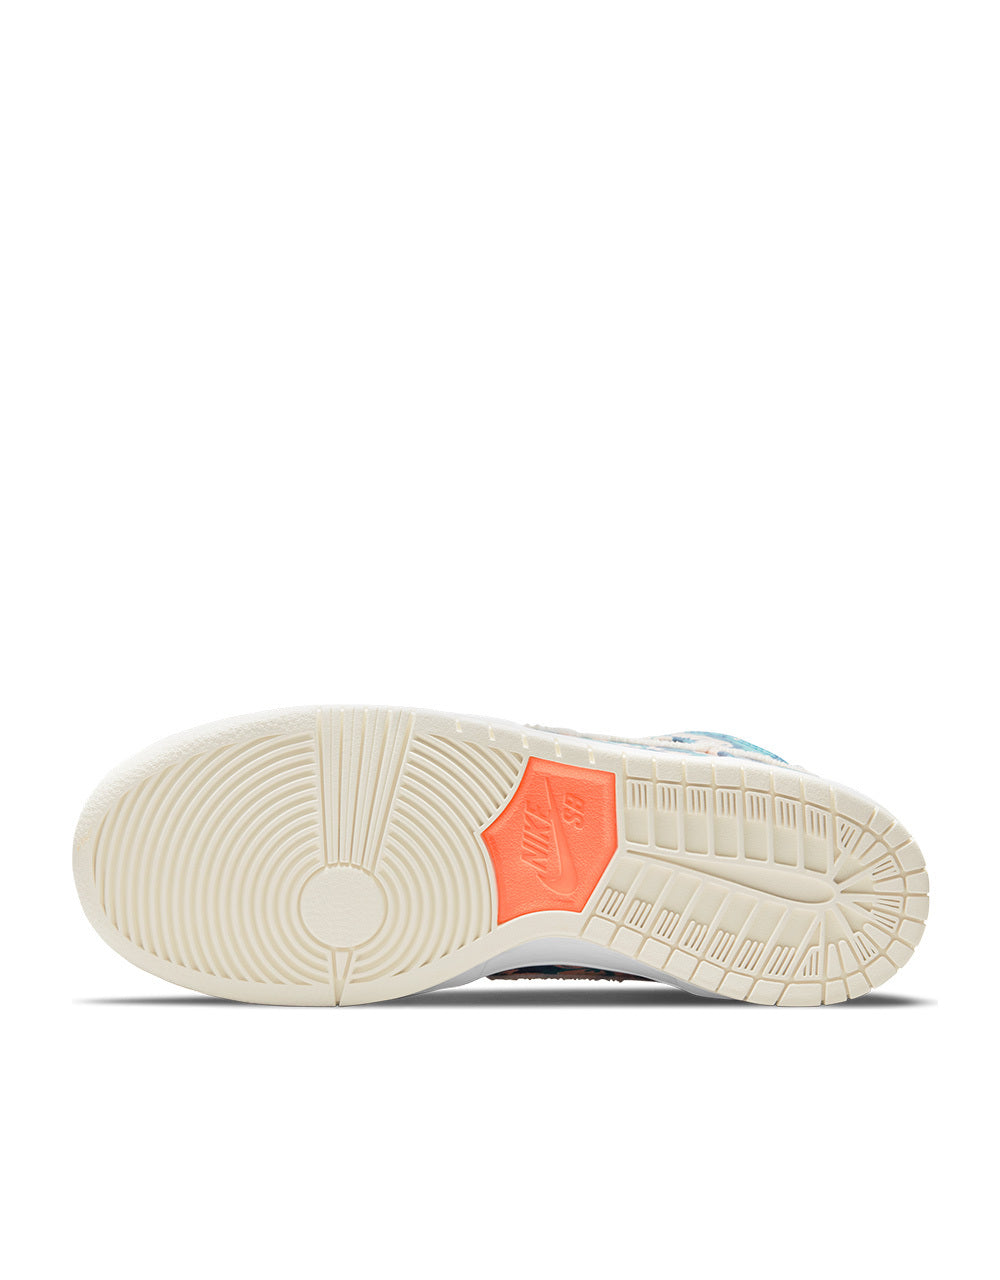 Nike SB 'Aloha' Dunk High Pro QS  - Aquamarine/Light Cream-Total Orange